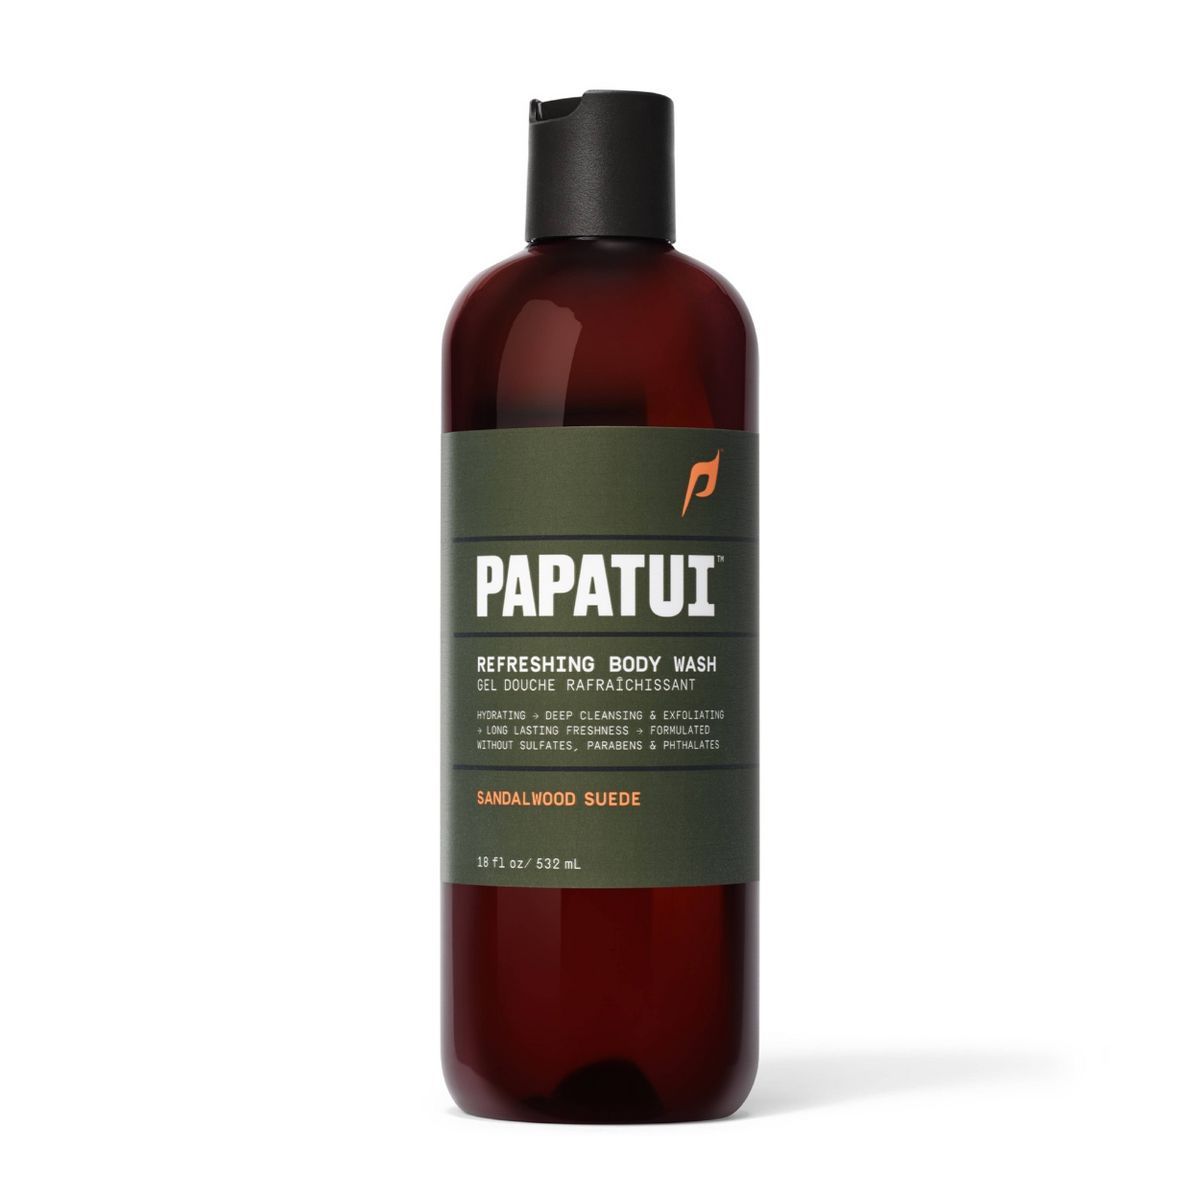 Papatui Refreshing Body Wash Sandalwood Suede - 18 fl oz - From Dwayne “The Rock” Johnson | Target